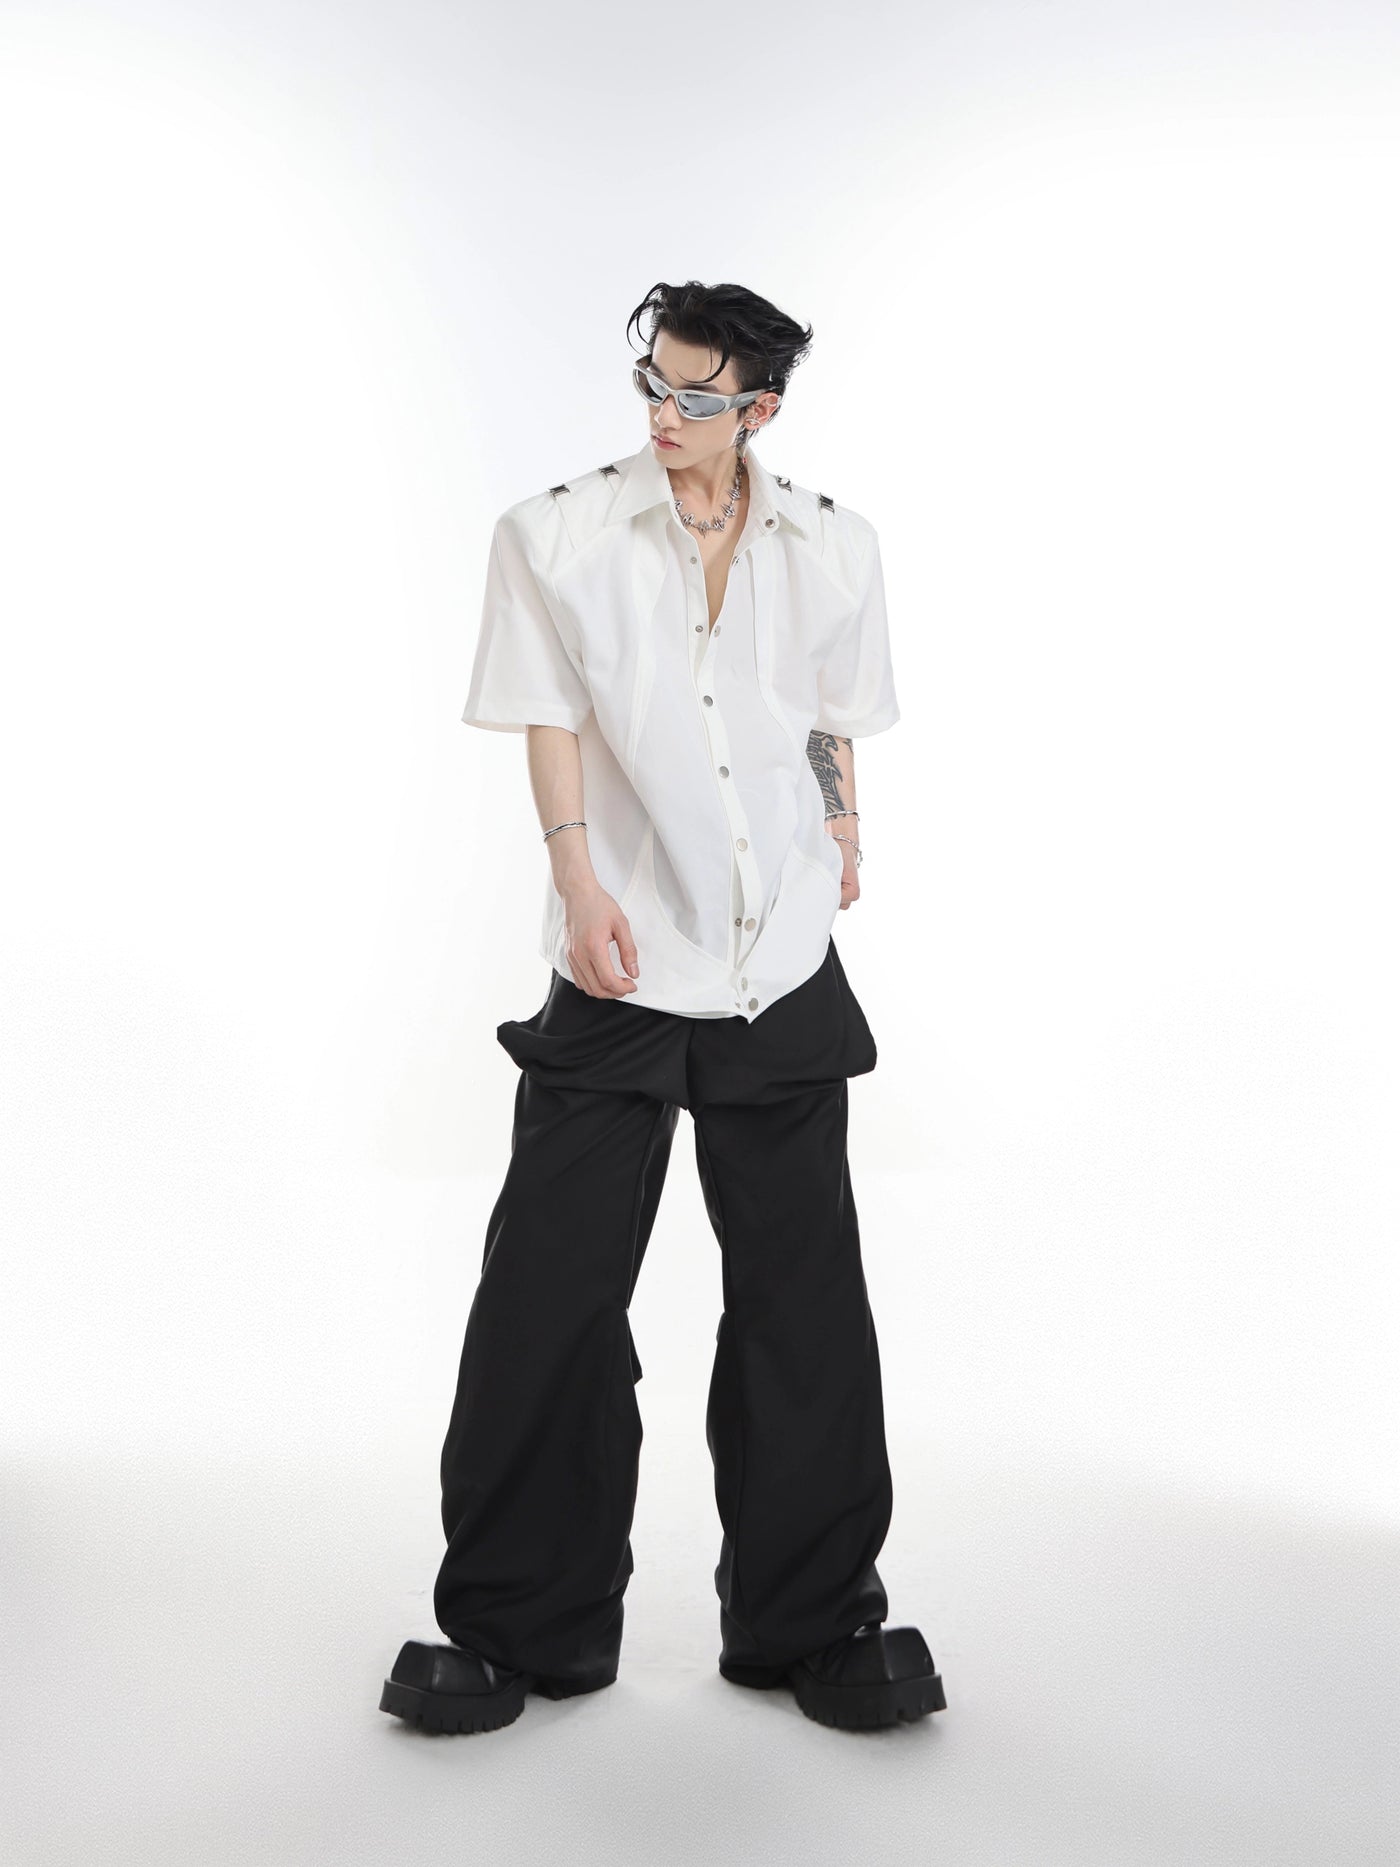 Shoulder Multiple Strap Belts Shirt Korean Street Fashion Shirt By Argue Culture Shop Online at OH Vault